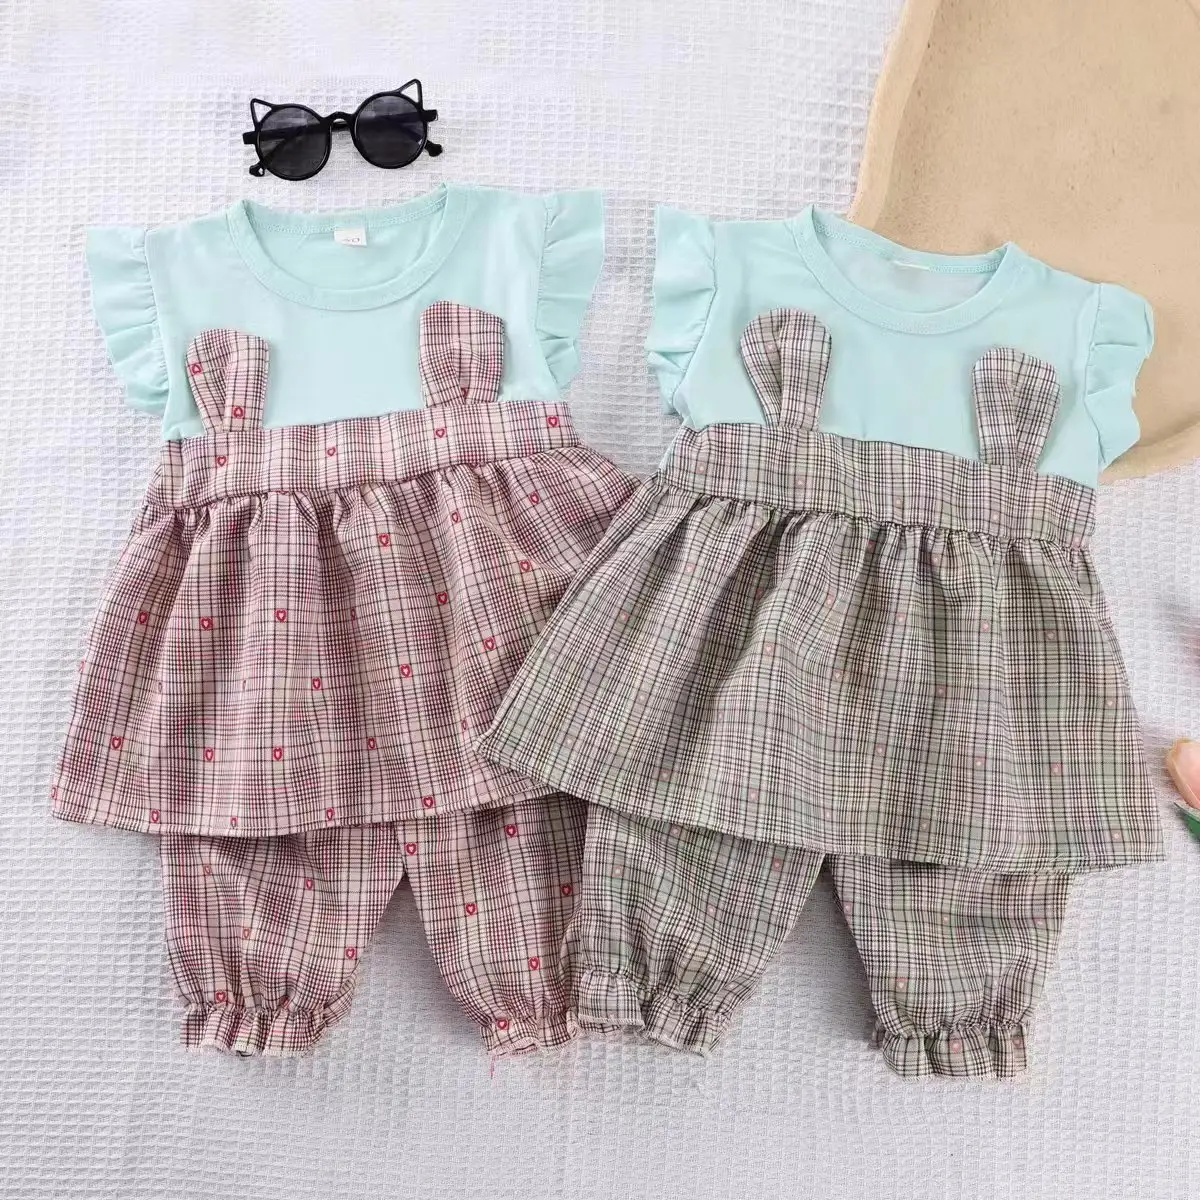 Kleinkind Baby Mädchen Sommer Mode Outfits Off Shoulder Shirt und Shorts Ripped Casual Newborn Girl Kleidung